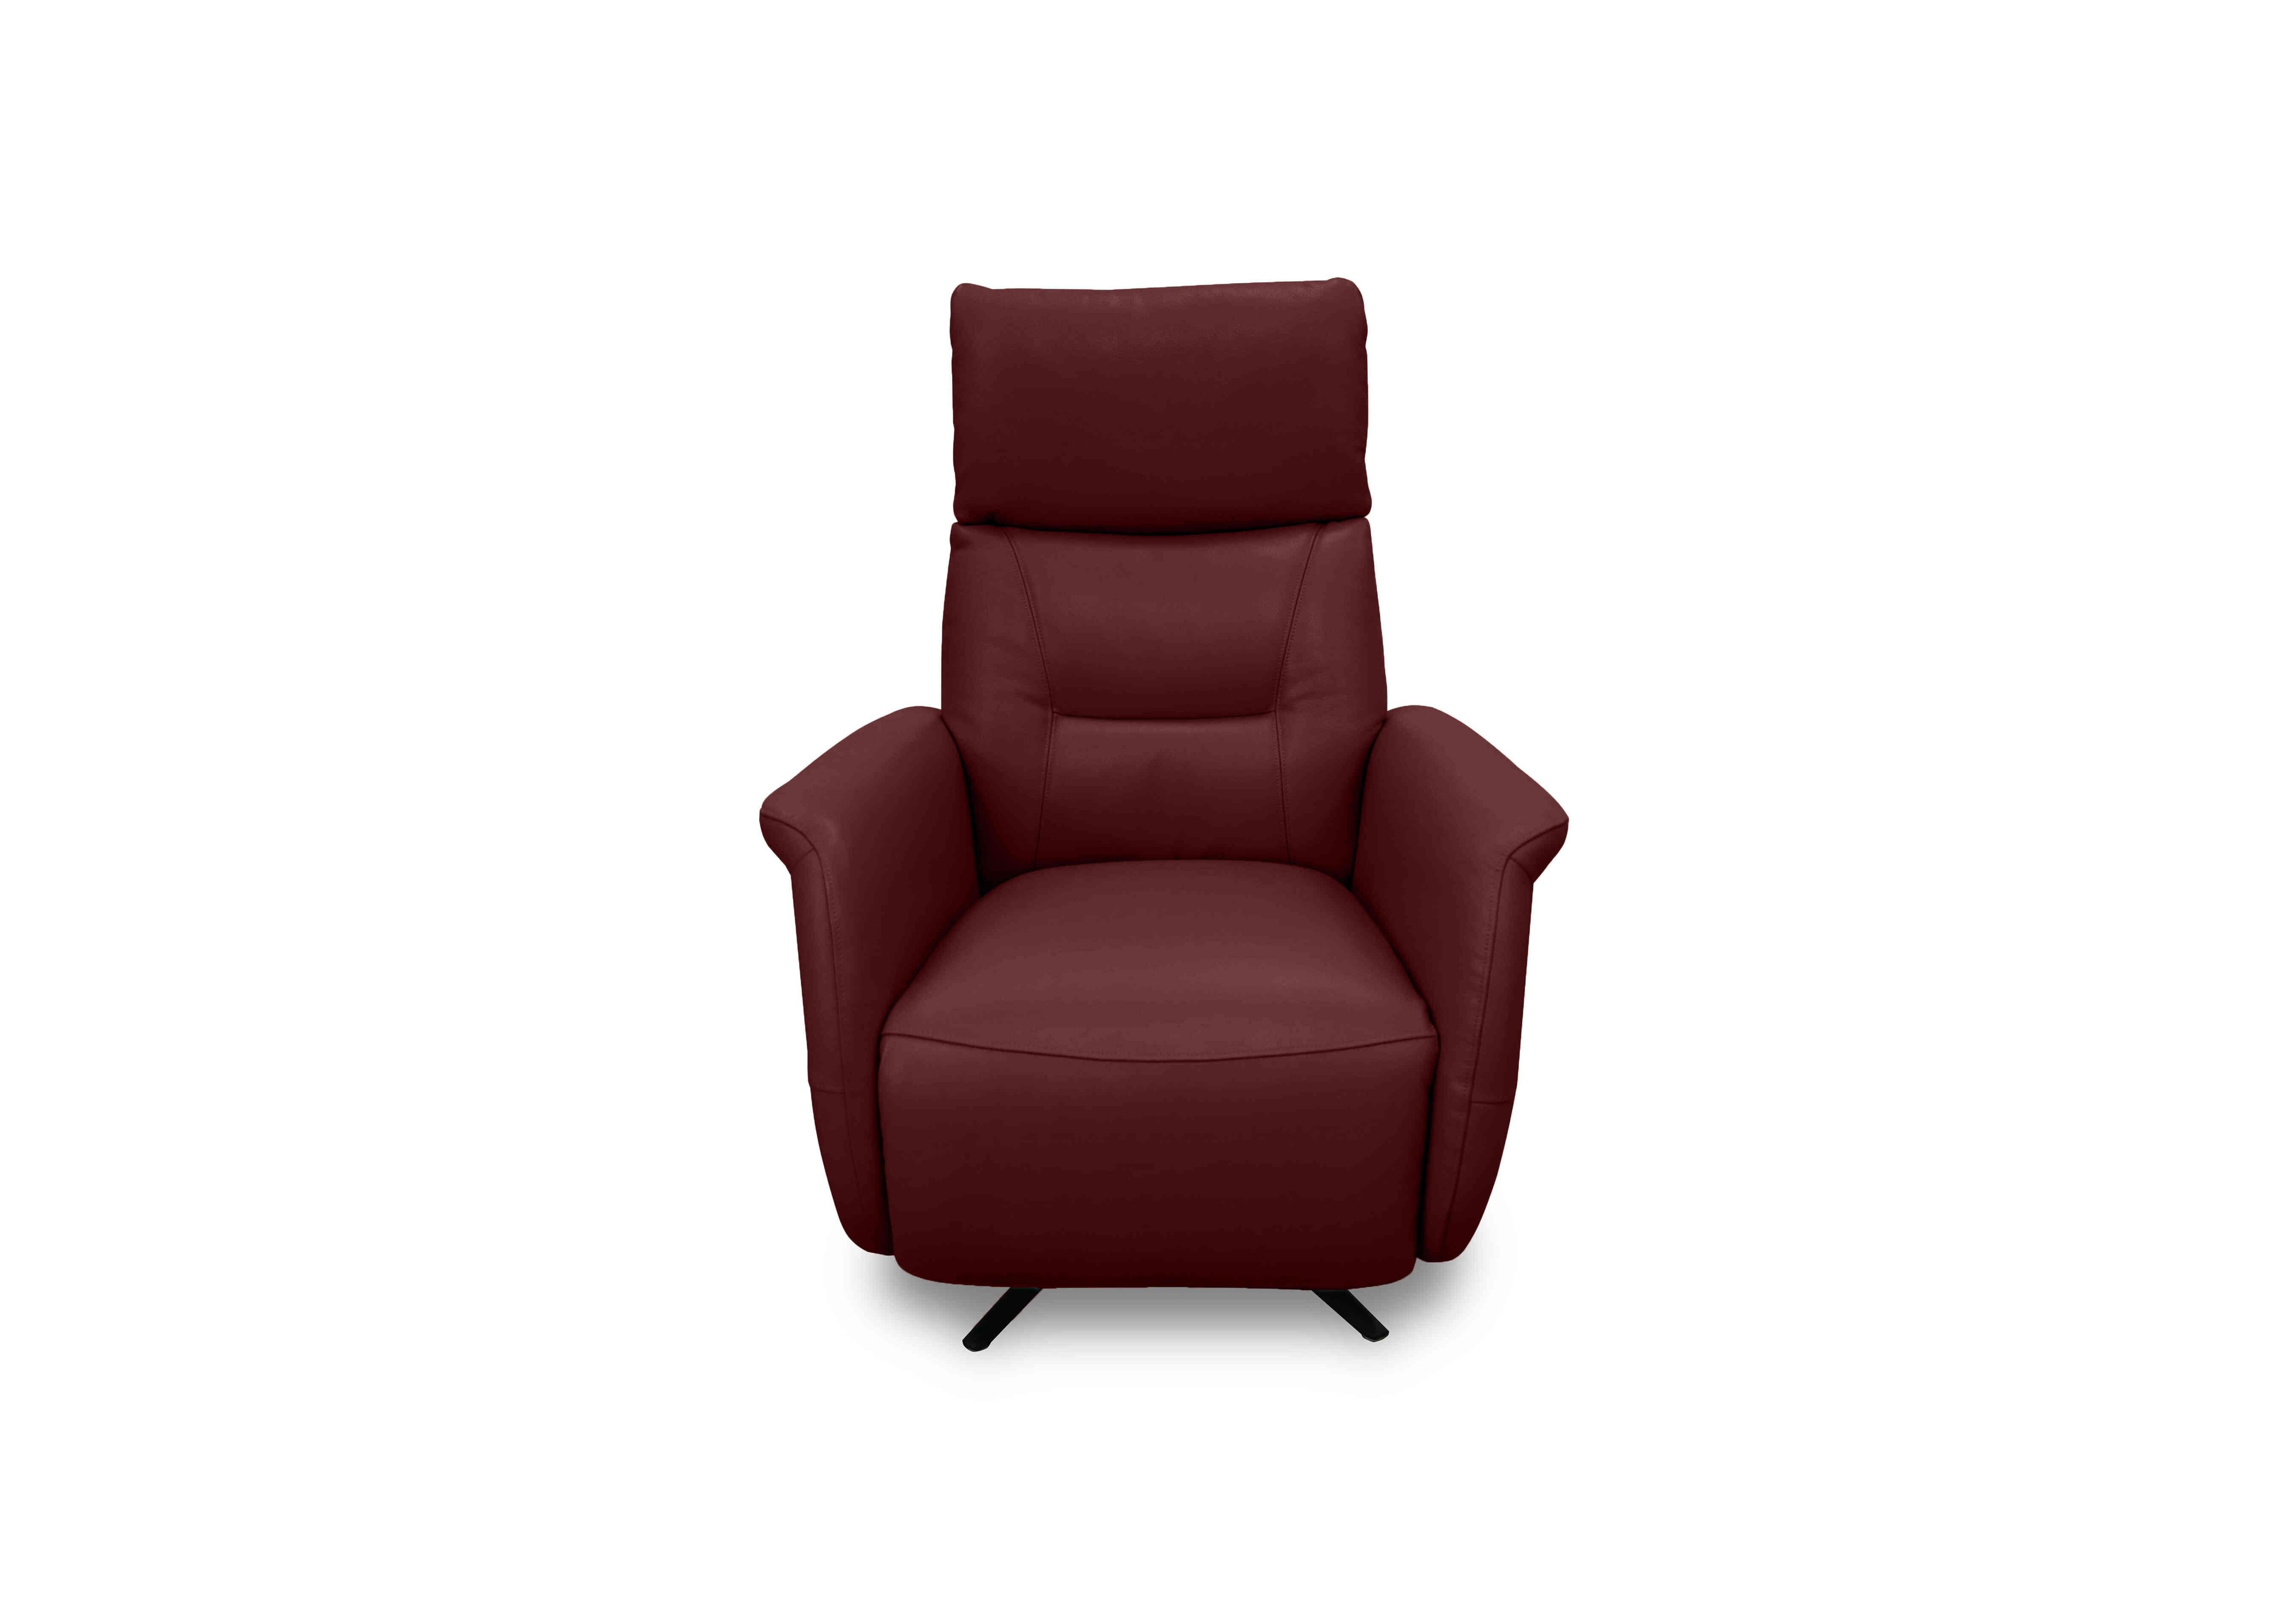 Designer Chair Collection Dusseldorf Leather Power Recliner Swivel Chair in Bv-035c Deep Red on Furniture Village